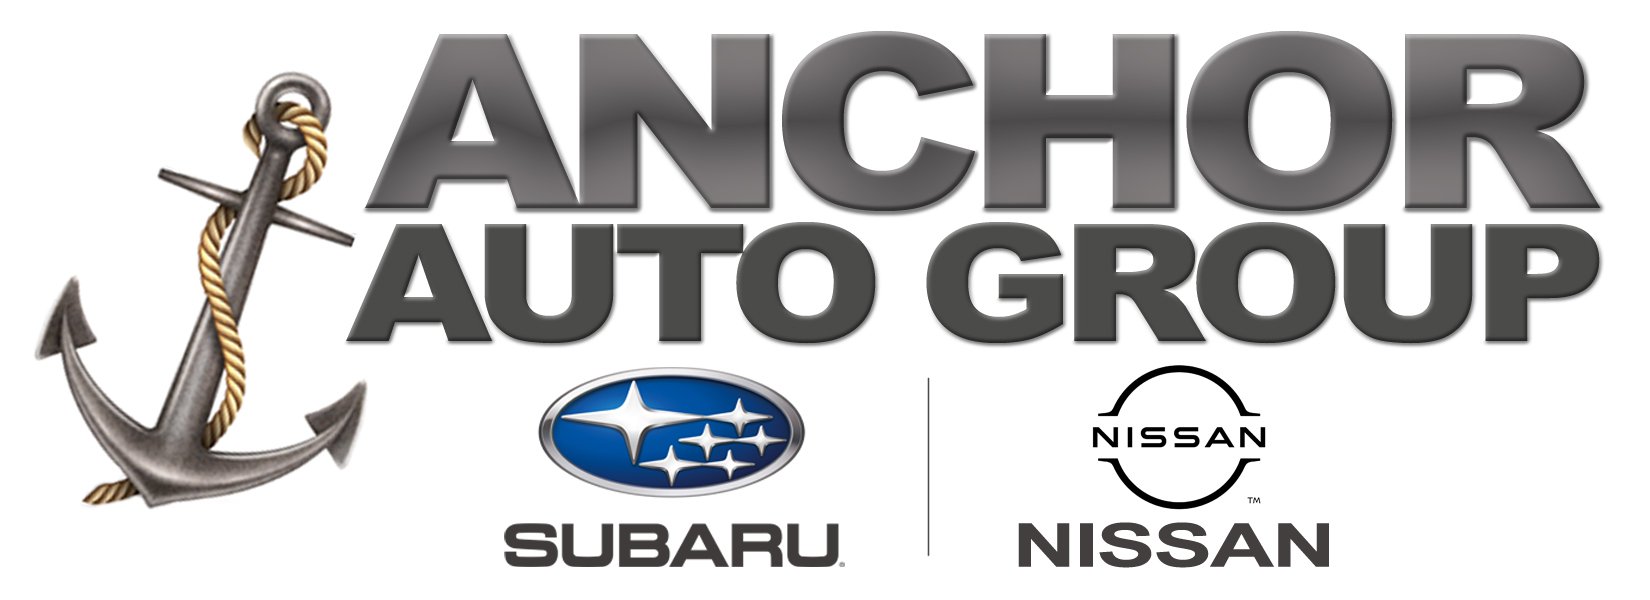 anchor group.new logo.4 blk.jpg